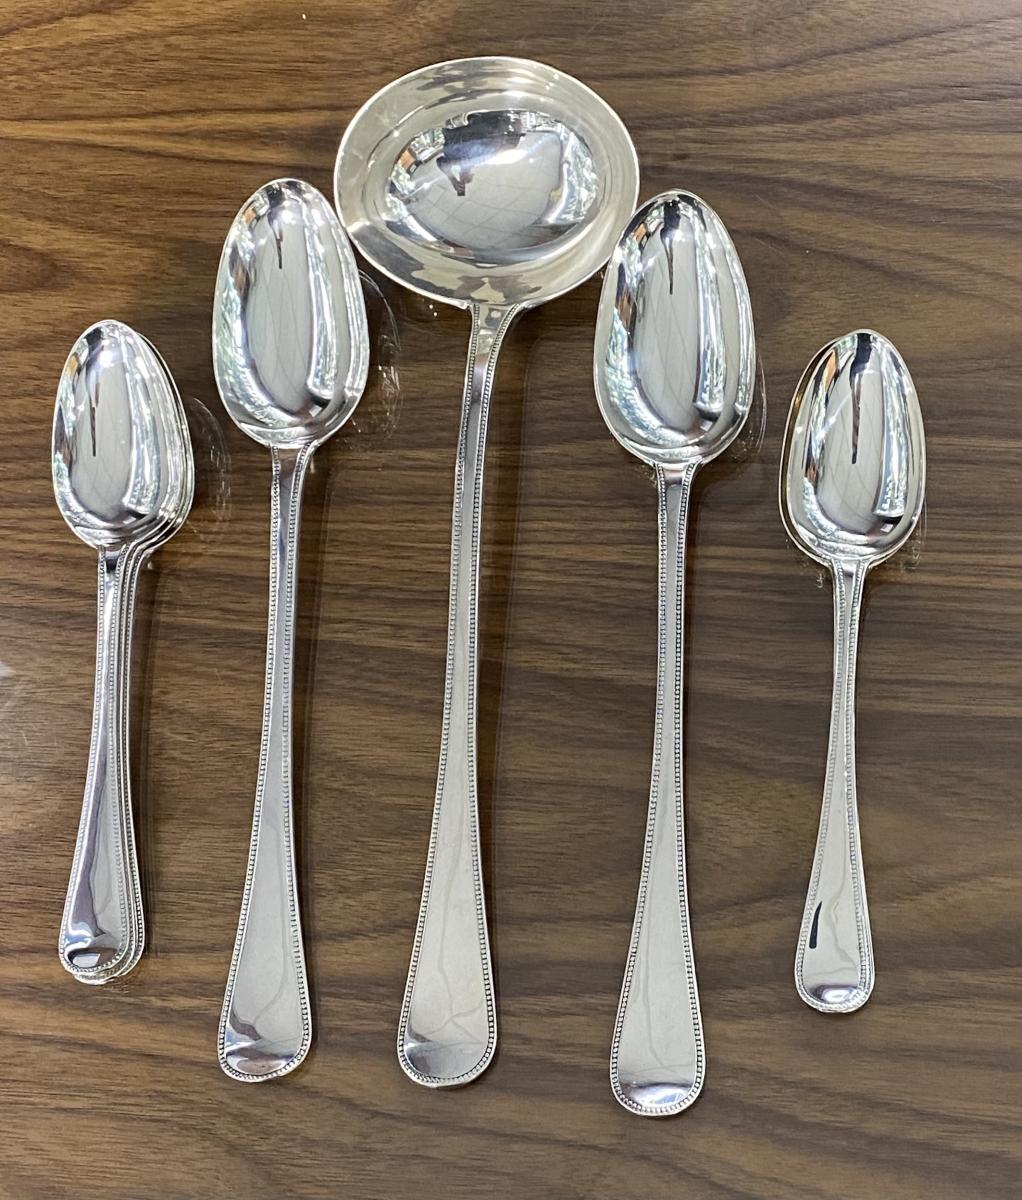 George Adams silver bead cutlery flatware set 1858